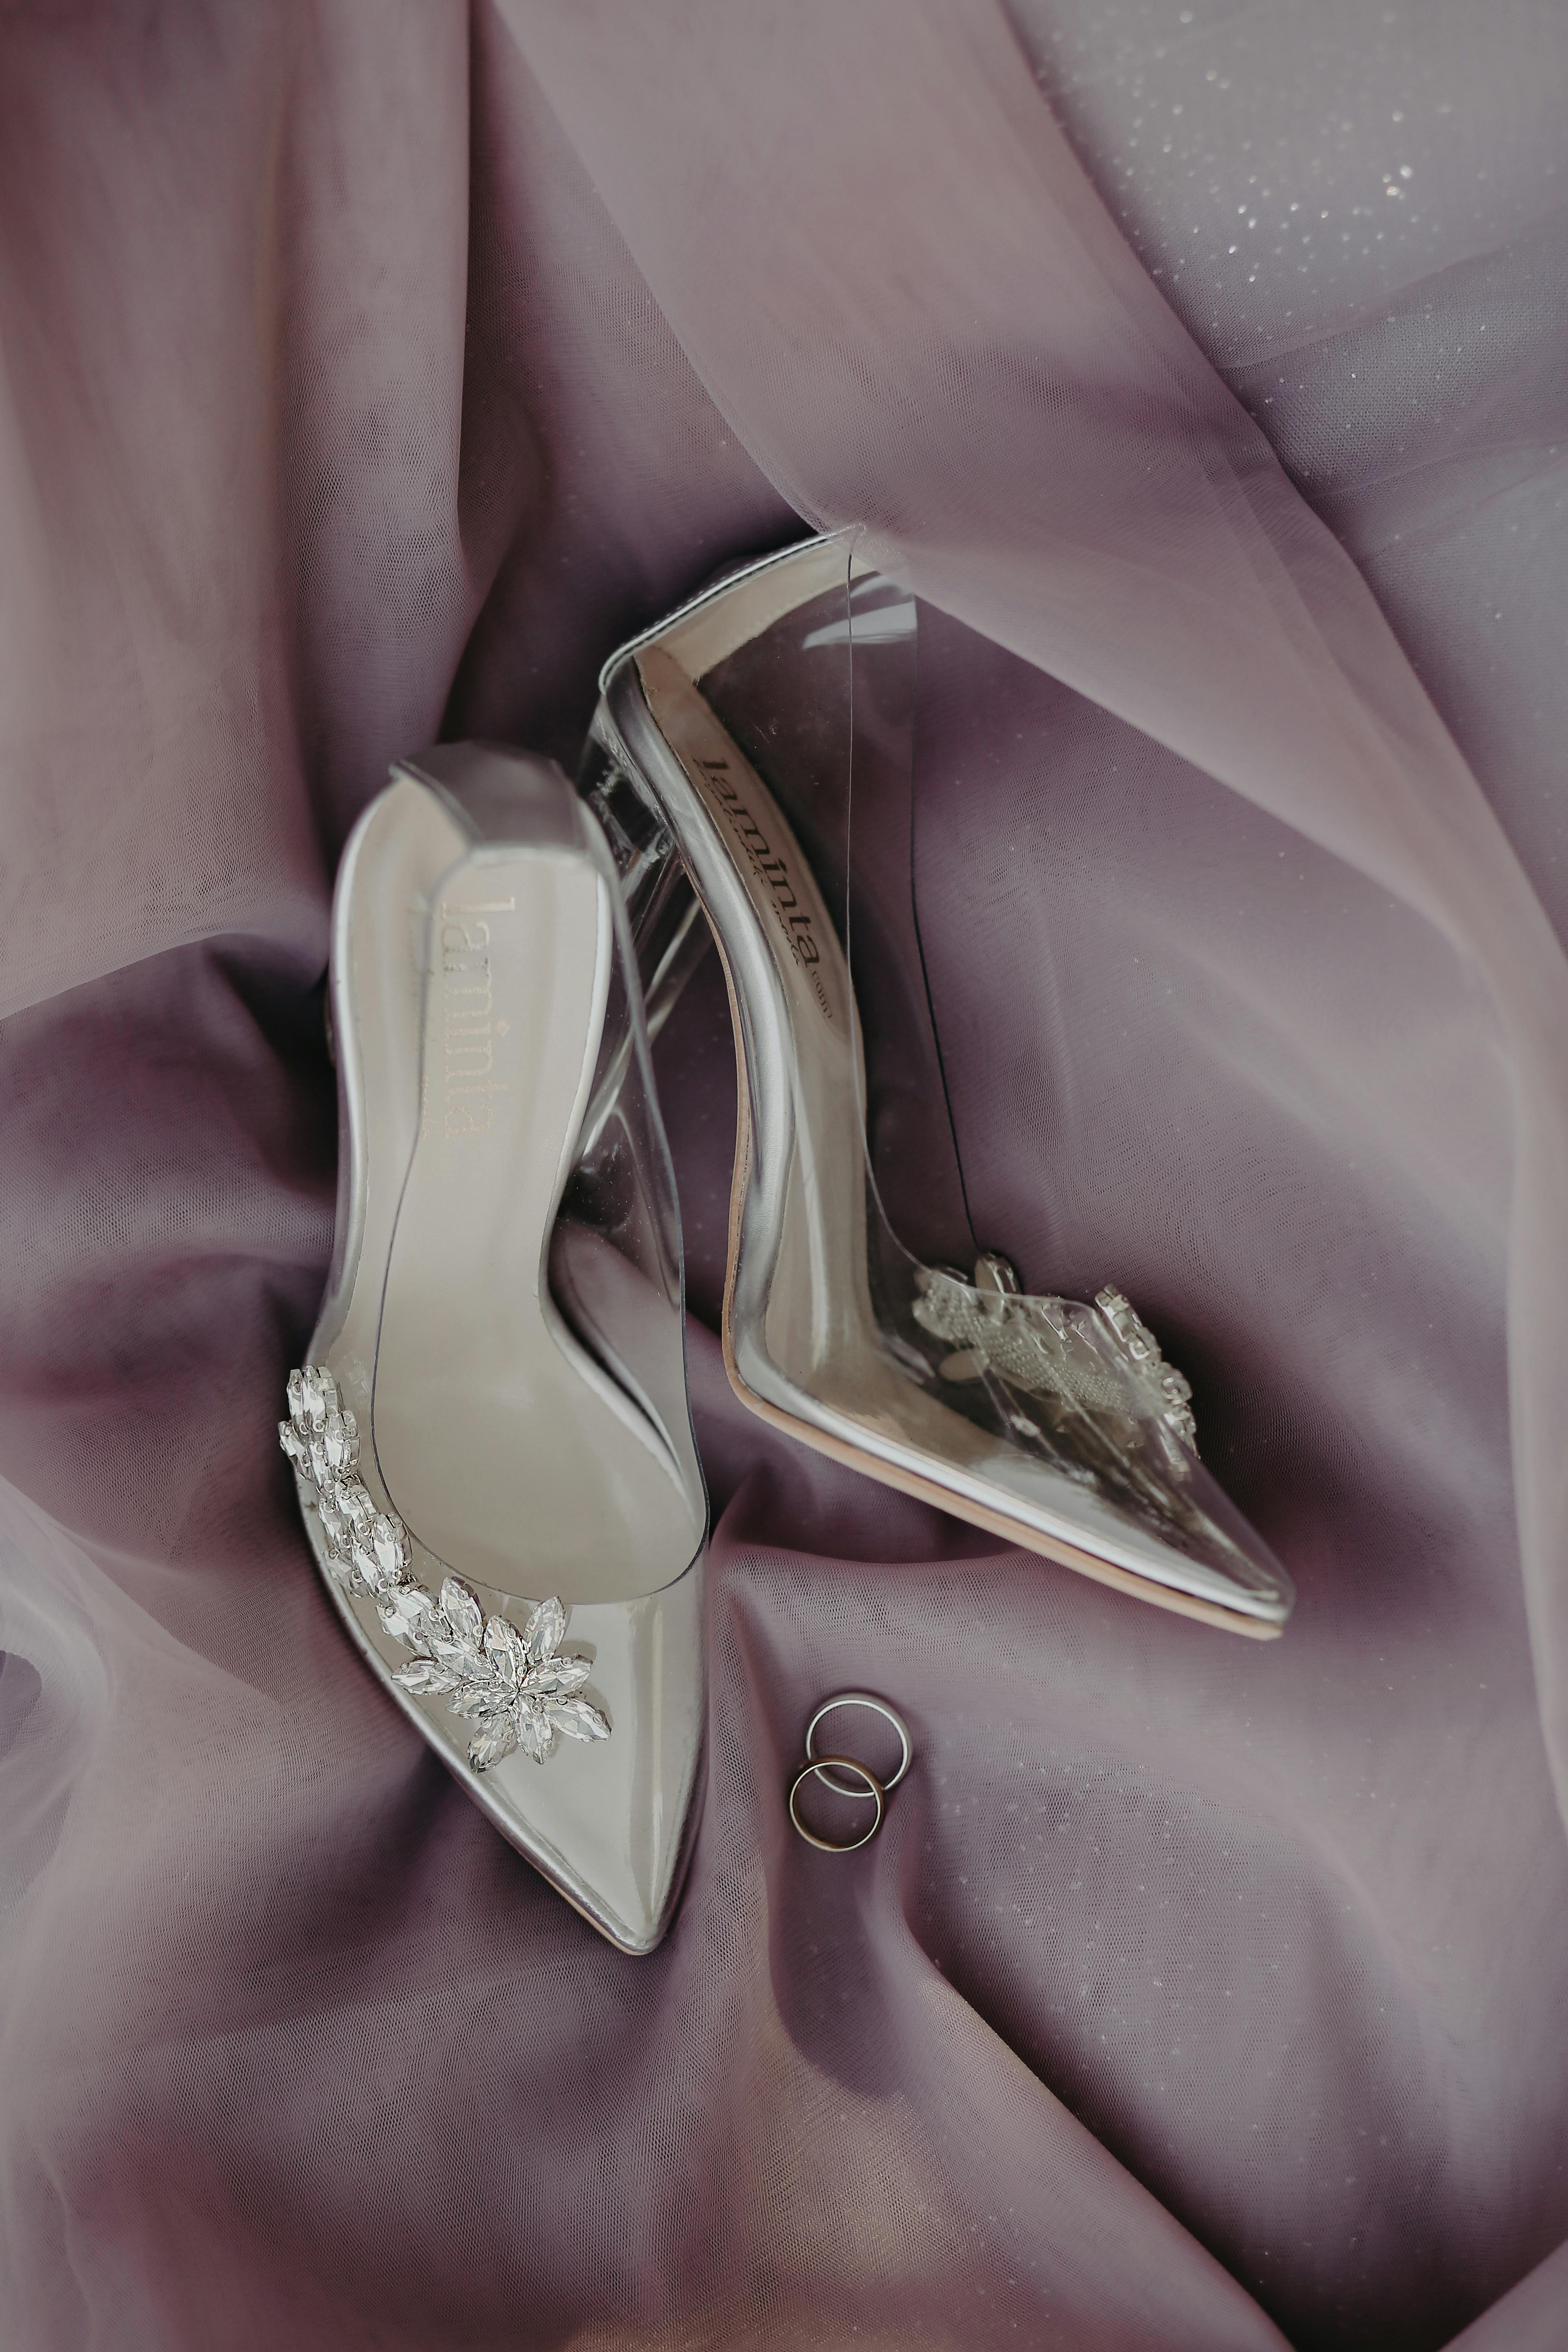 Capollini Woman's Shoes, RRP £110, Size UK 7.5, Colour Silver, 2” Heels, |  eBay